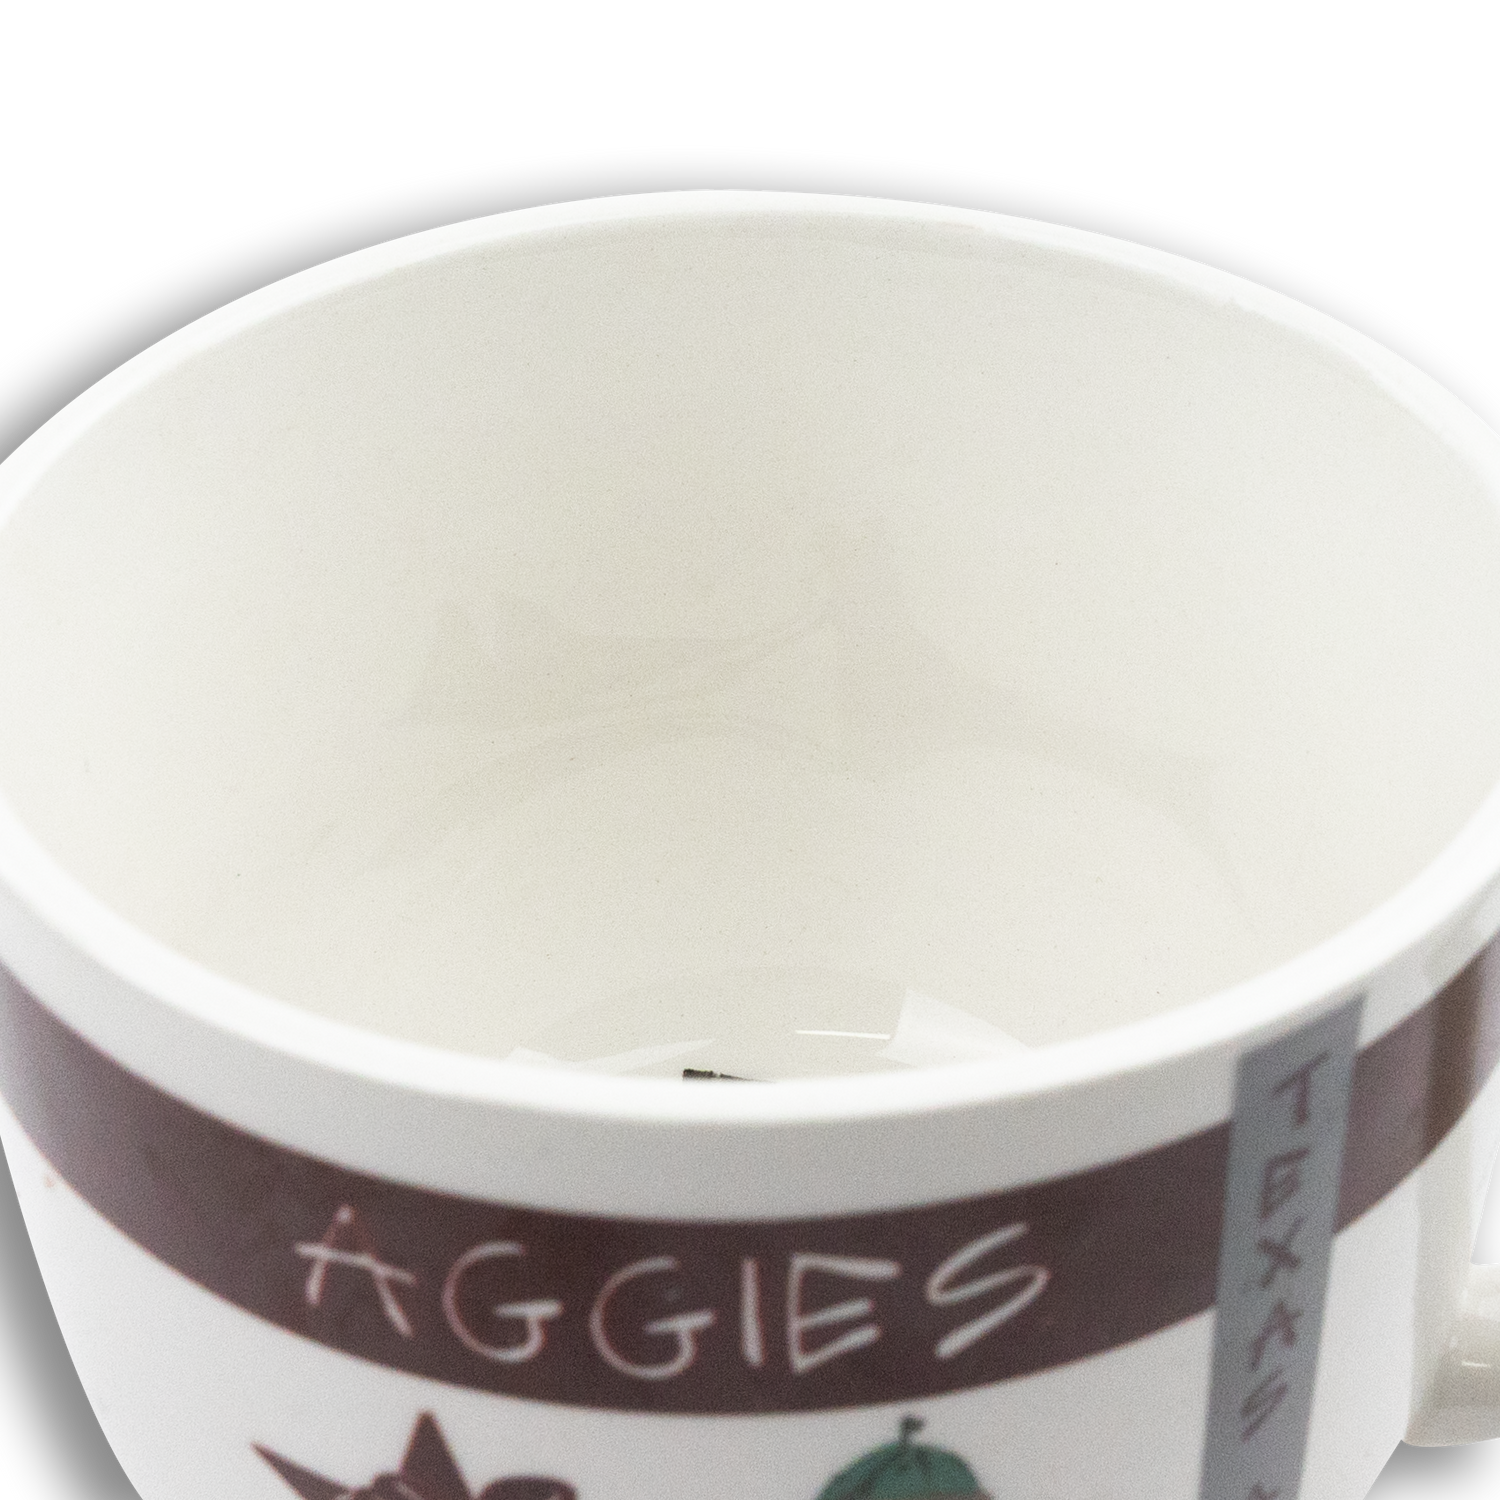 Texas A&M Aggies White Mug 19 Oz